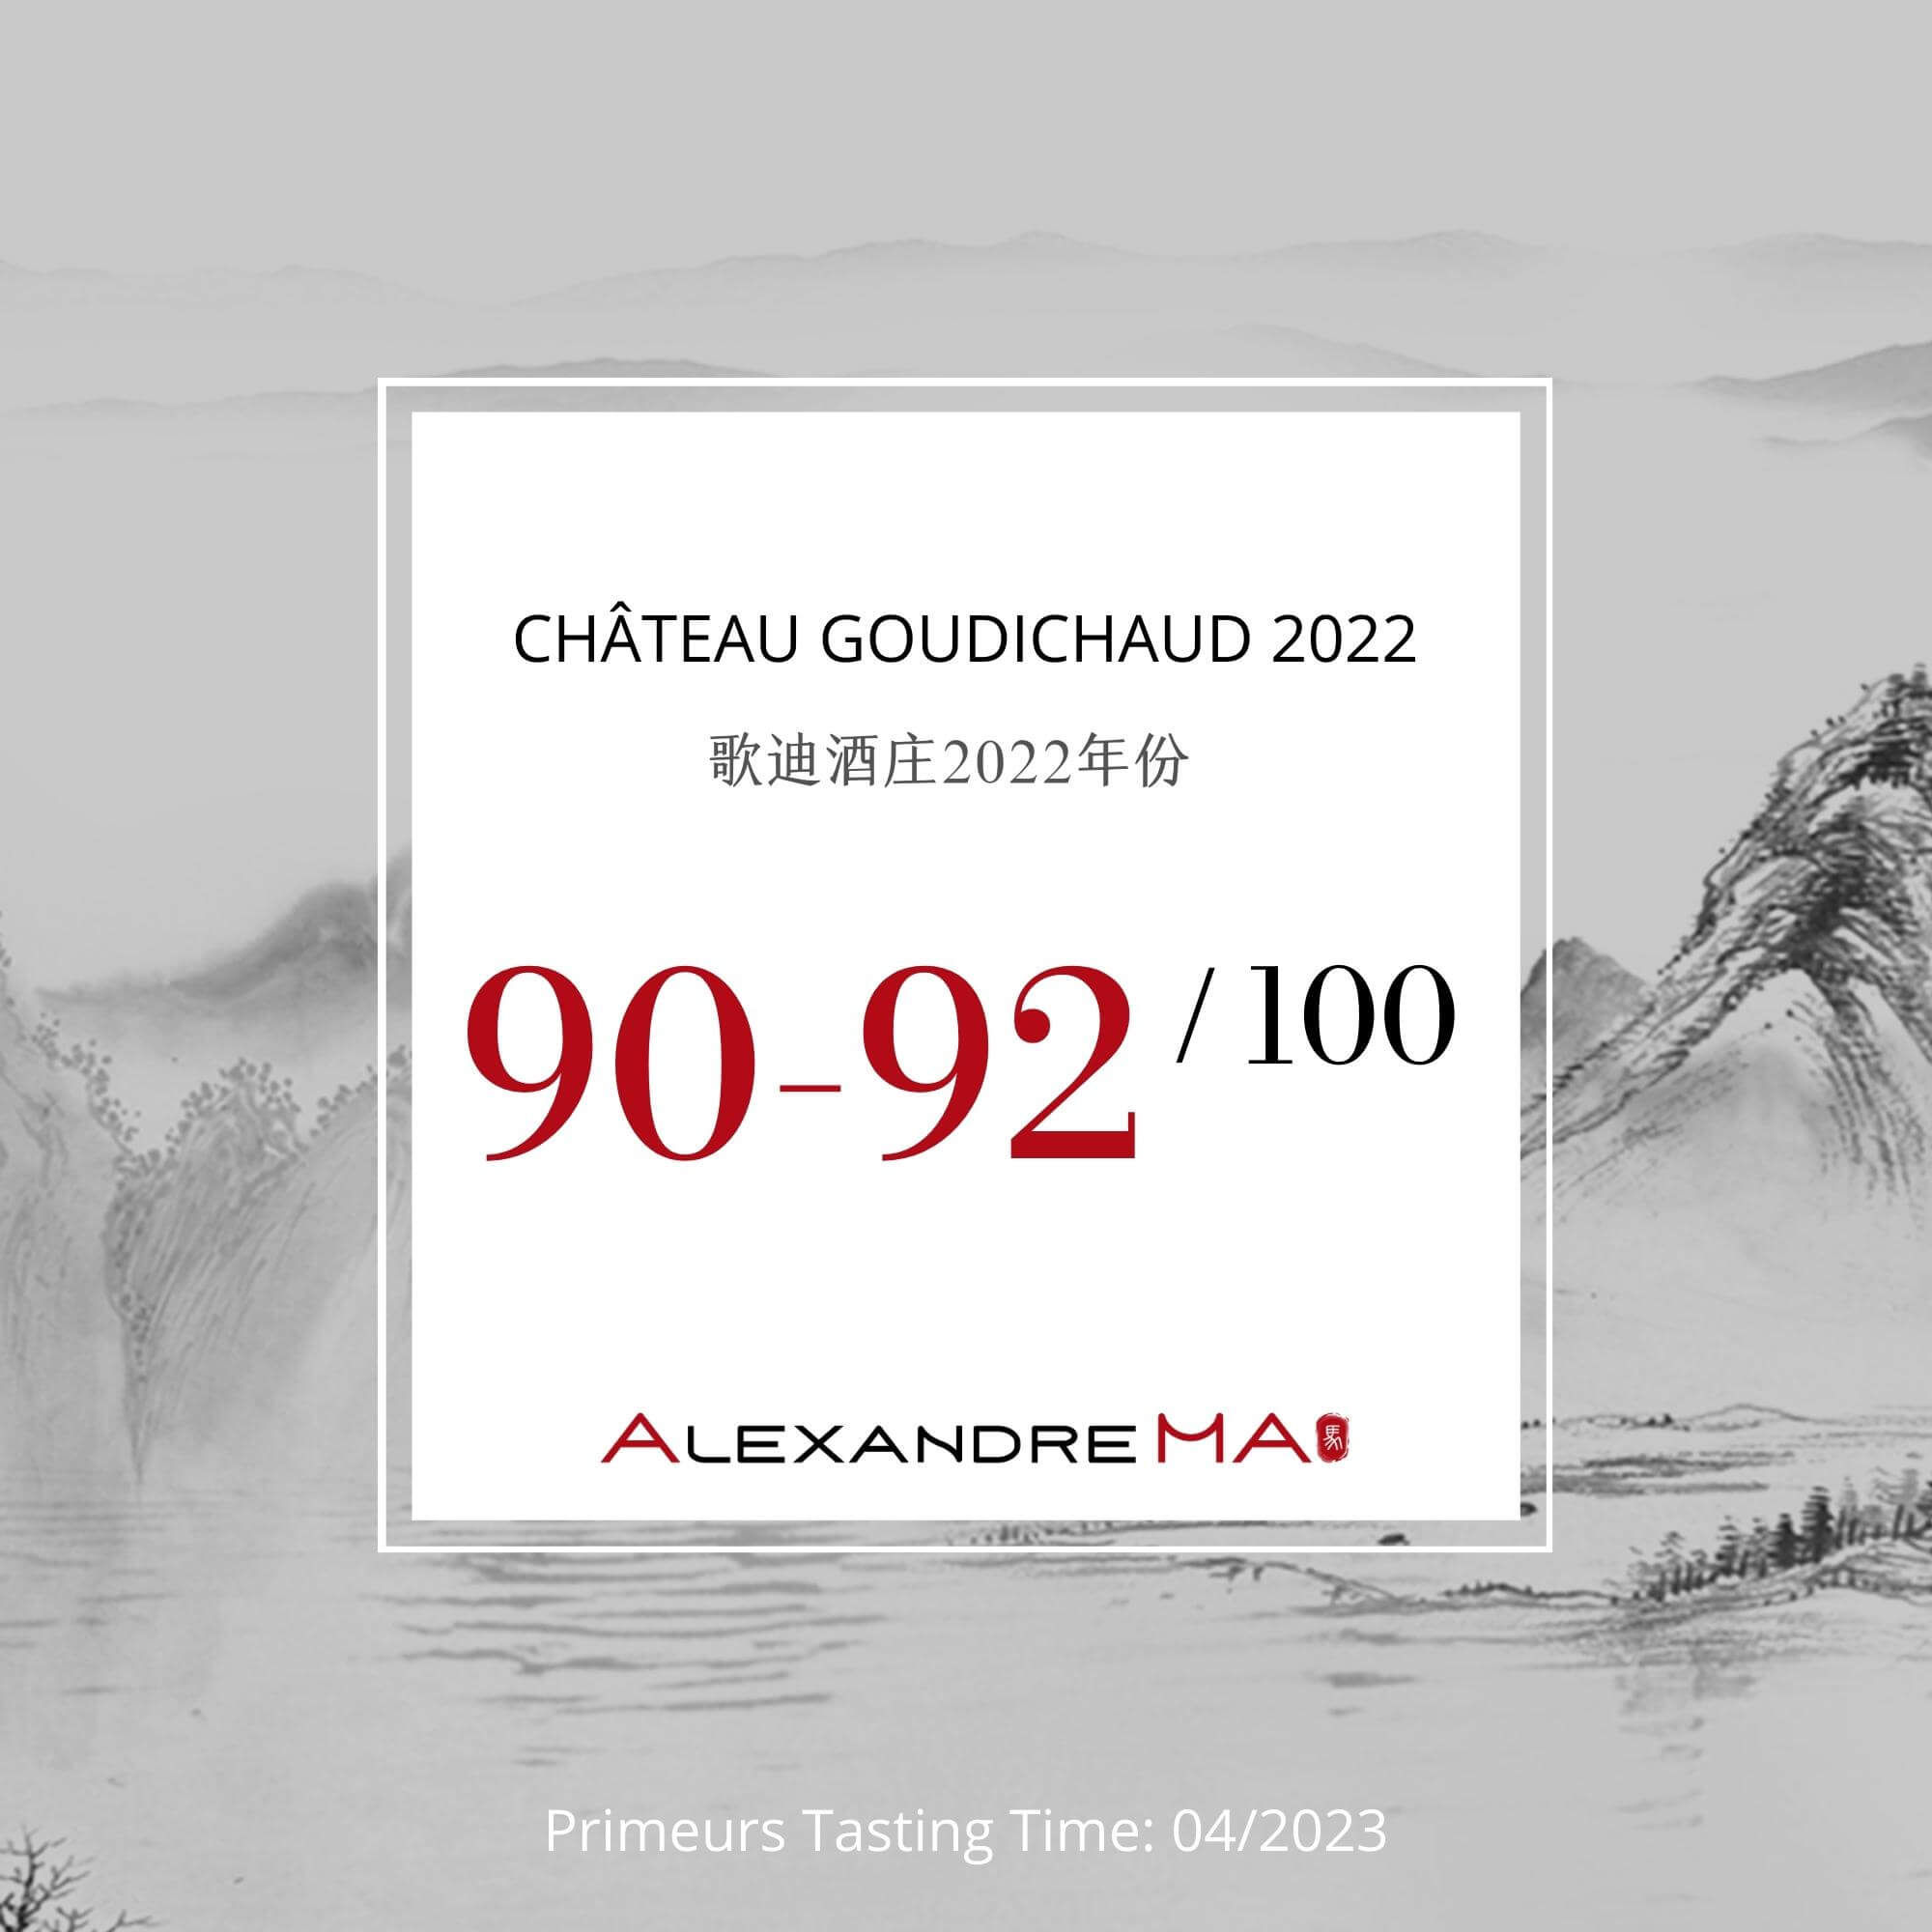 Château Goudichaud 2022 Primeurs - Alexandre MA